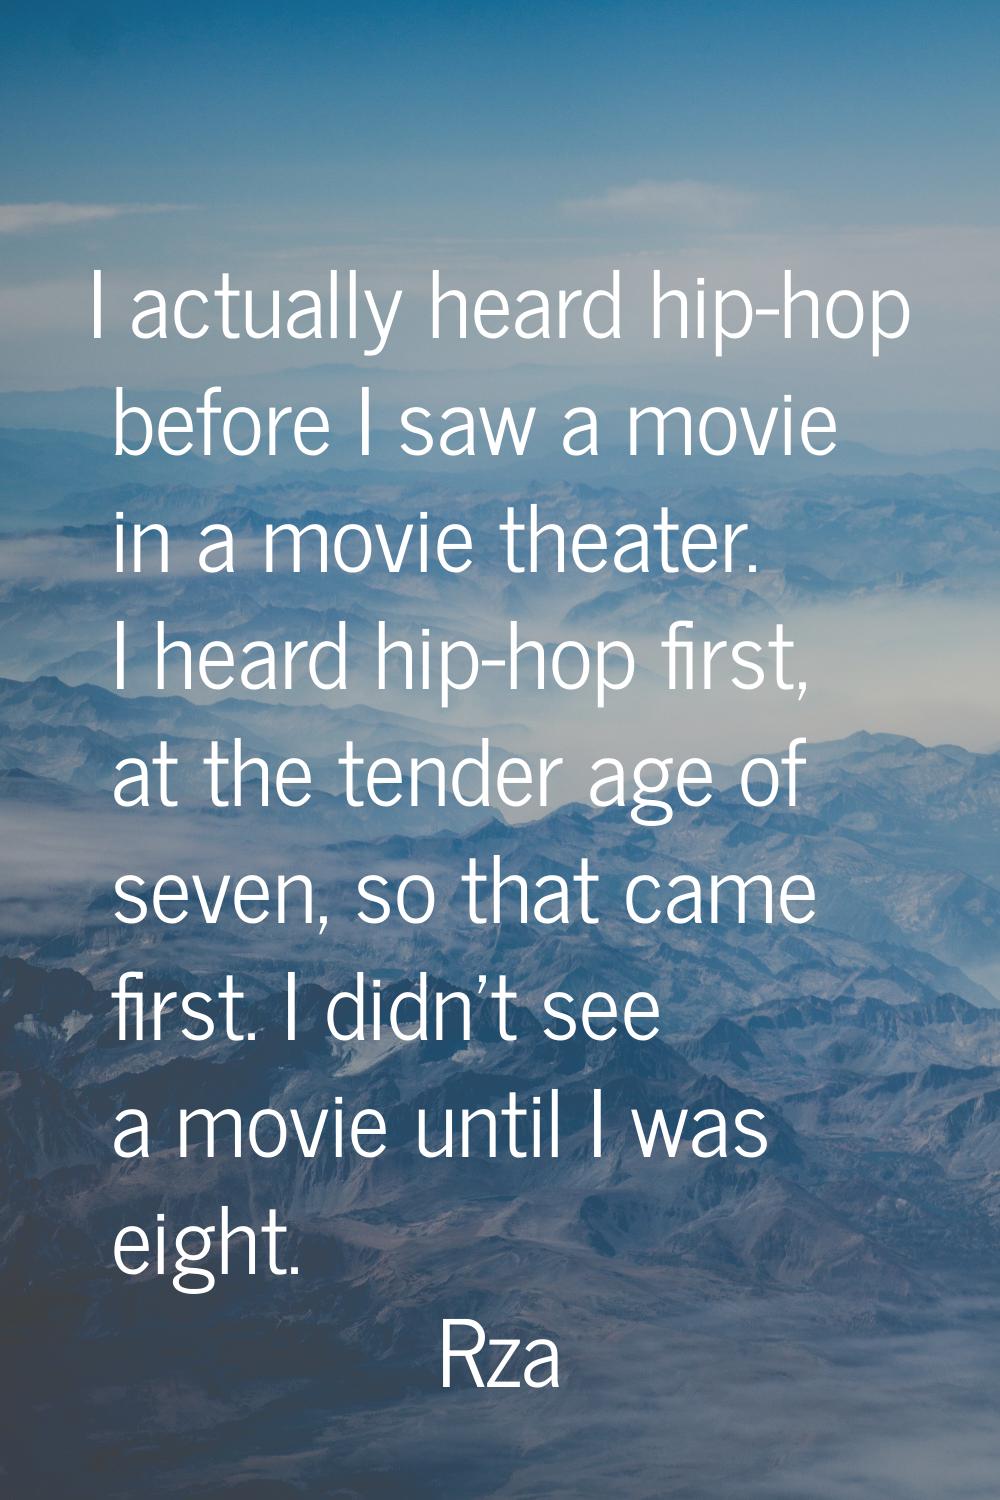 I actually heard hip-hop before I saw a movie in a movie theater. I heard hip-hop first, at the ten